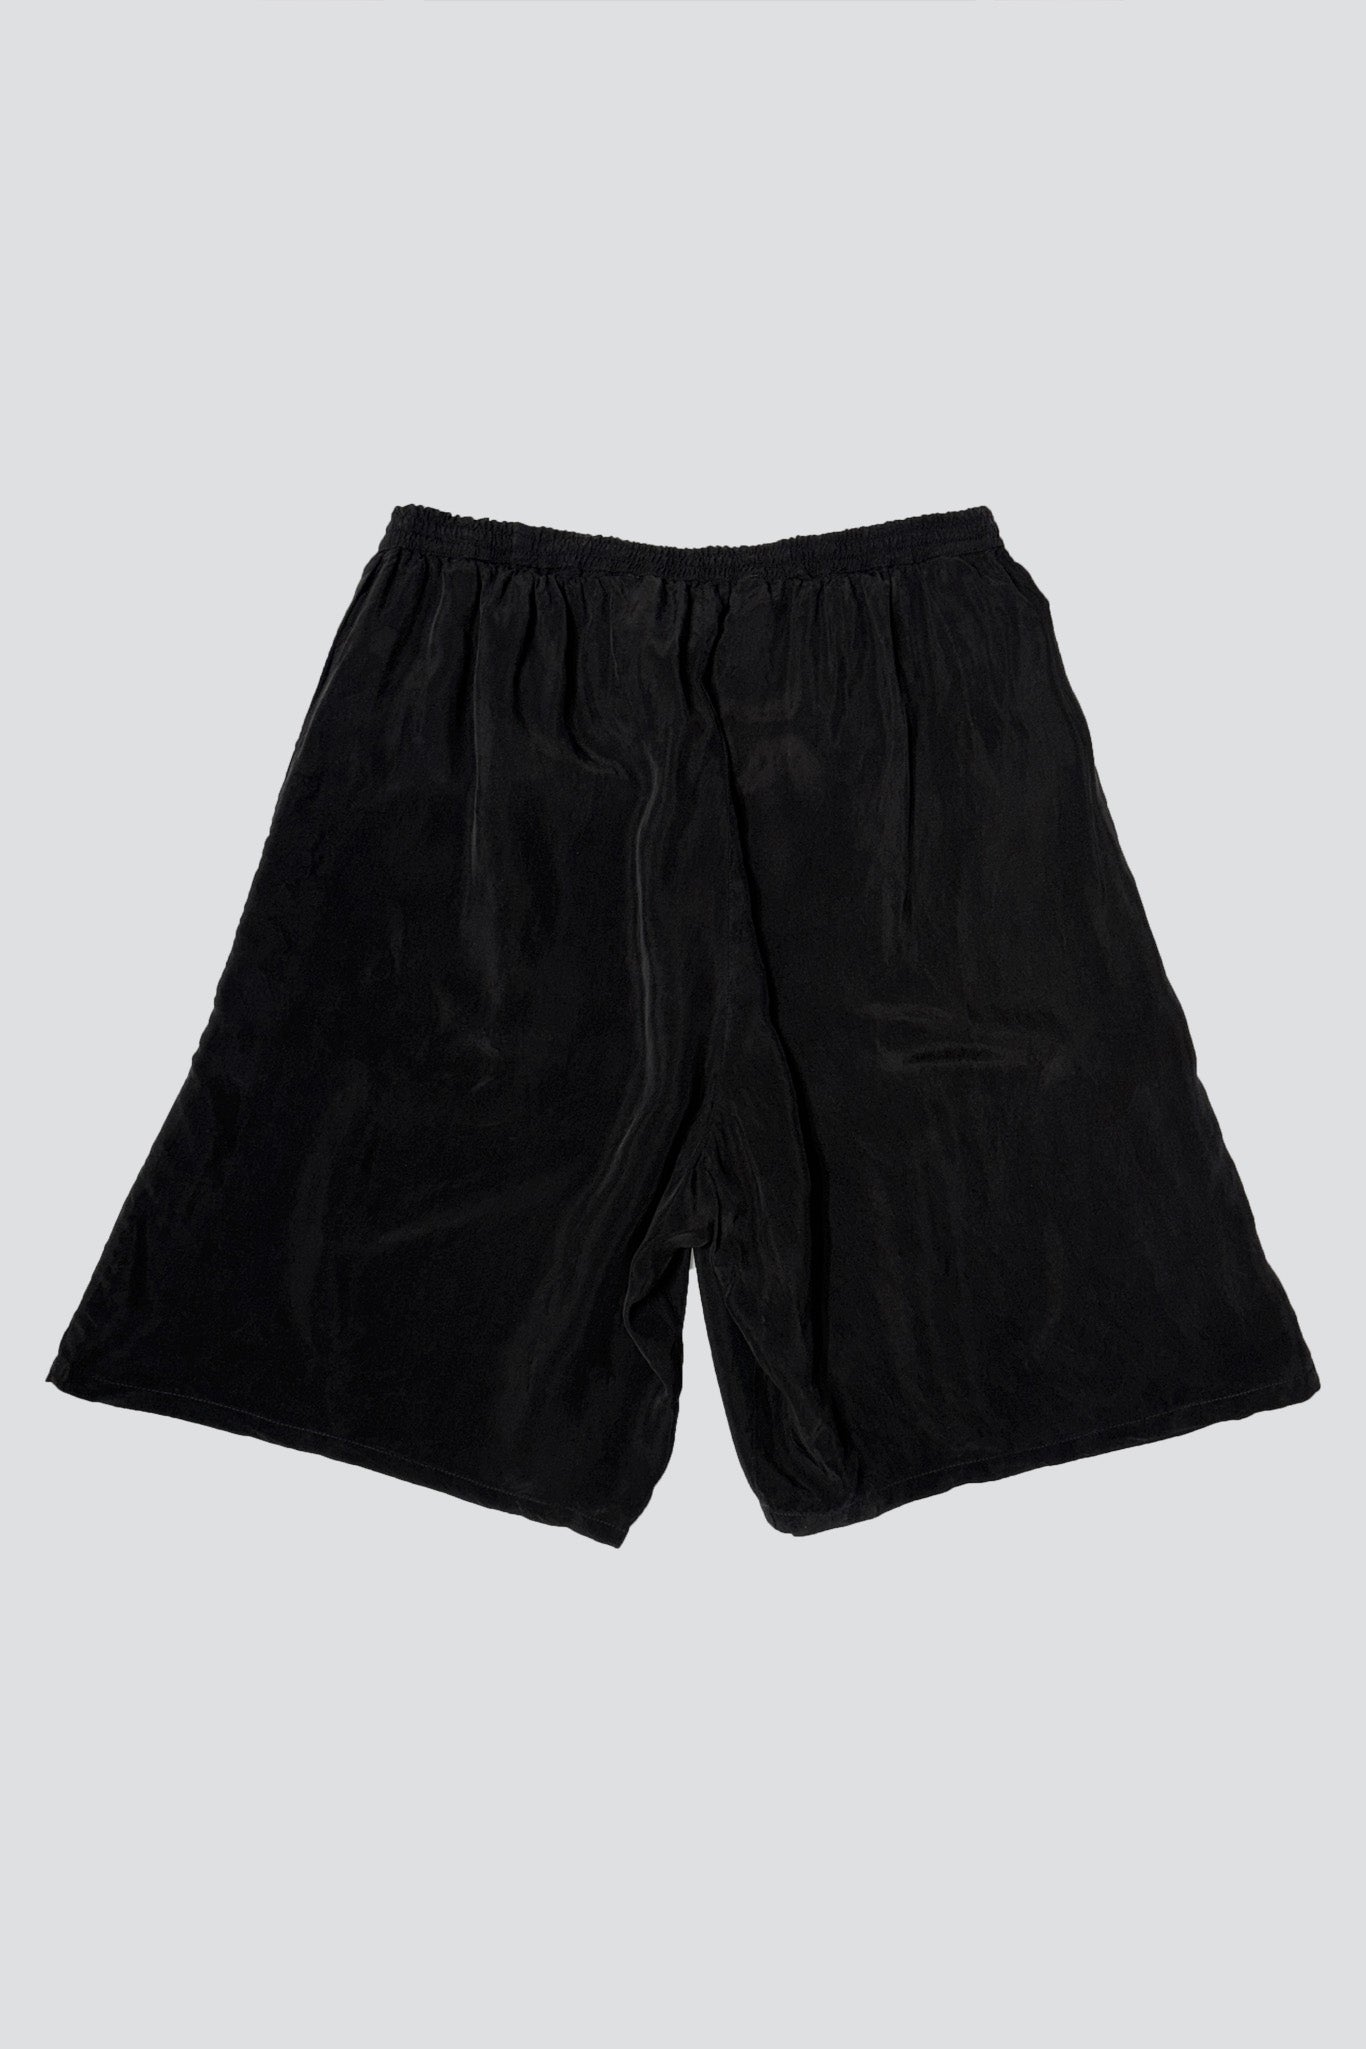 No.259 Black Cupro Short Trousers